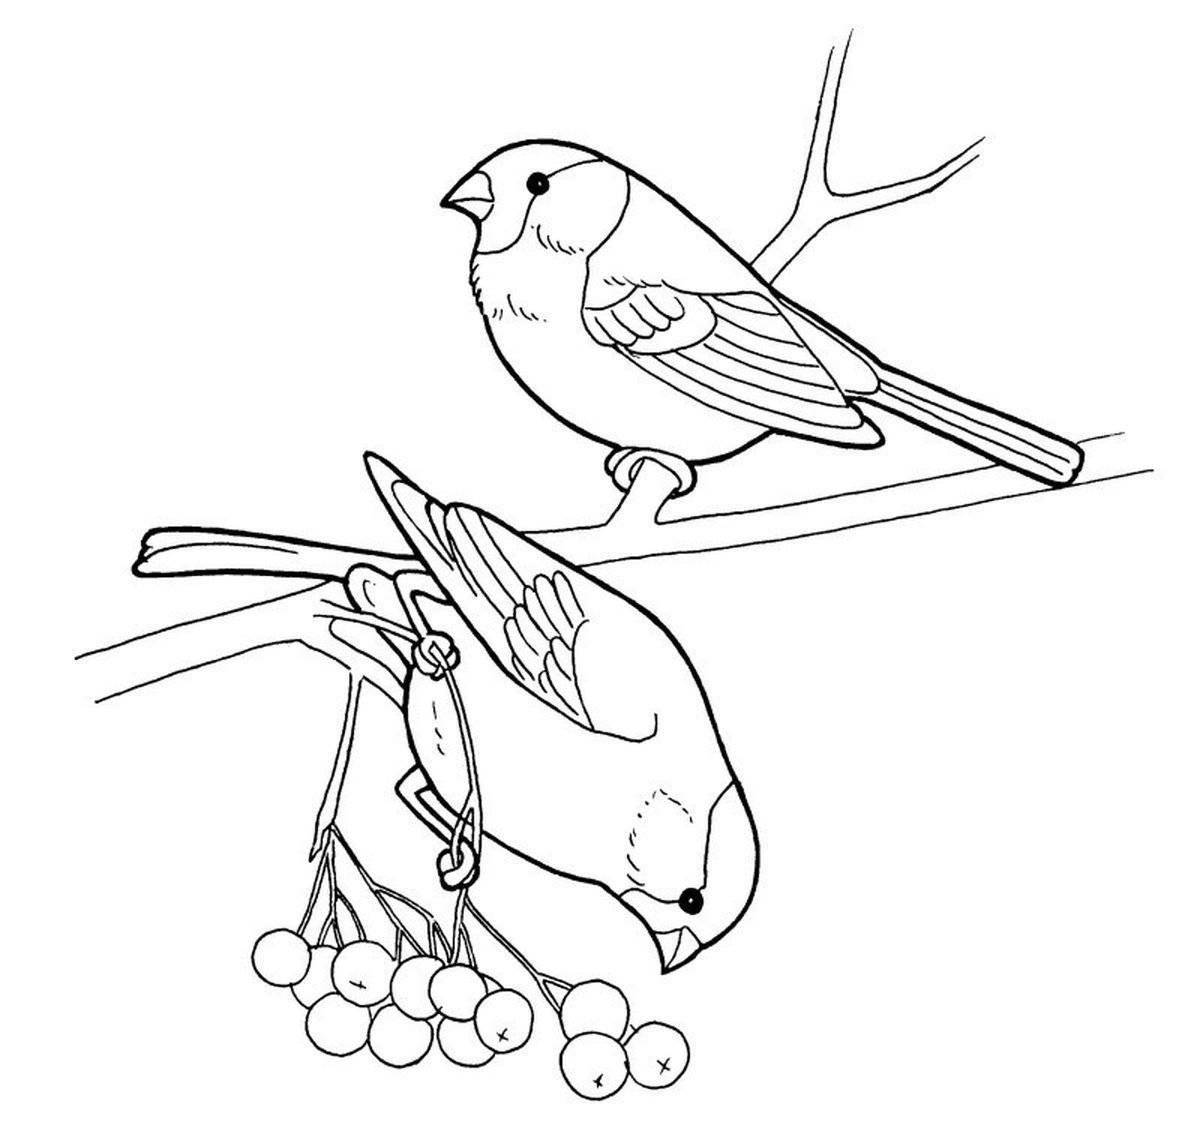 Joyful winter birds coloring book for kids